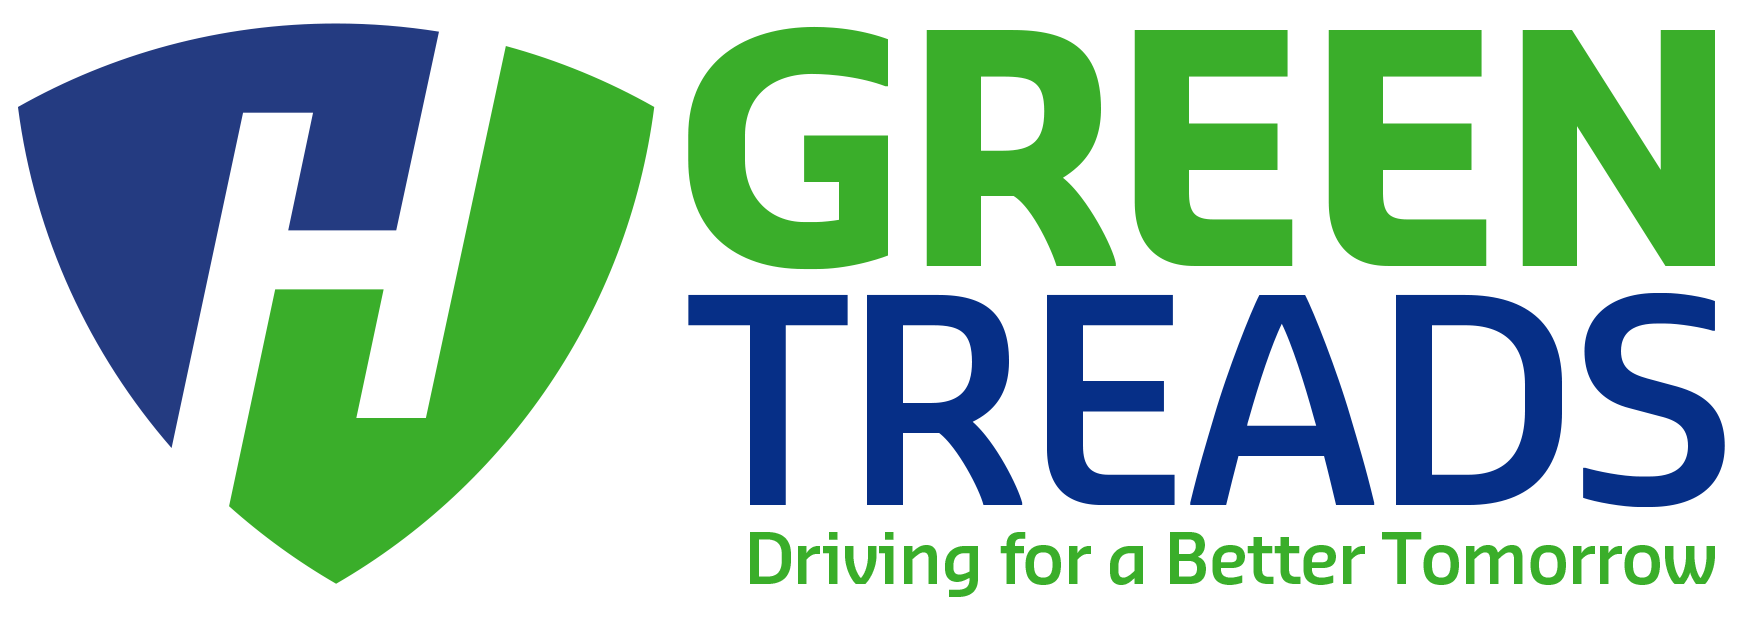 Gteen Treads logo